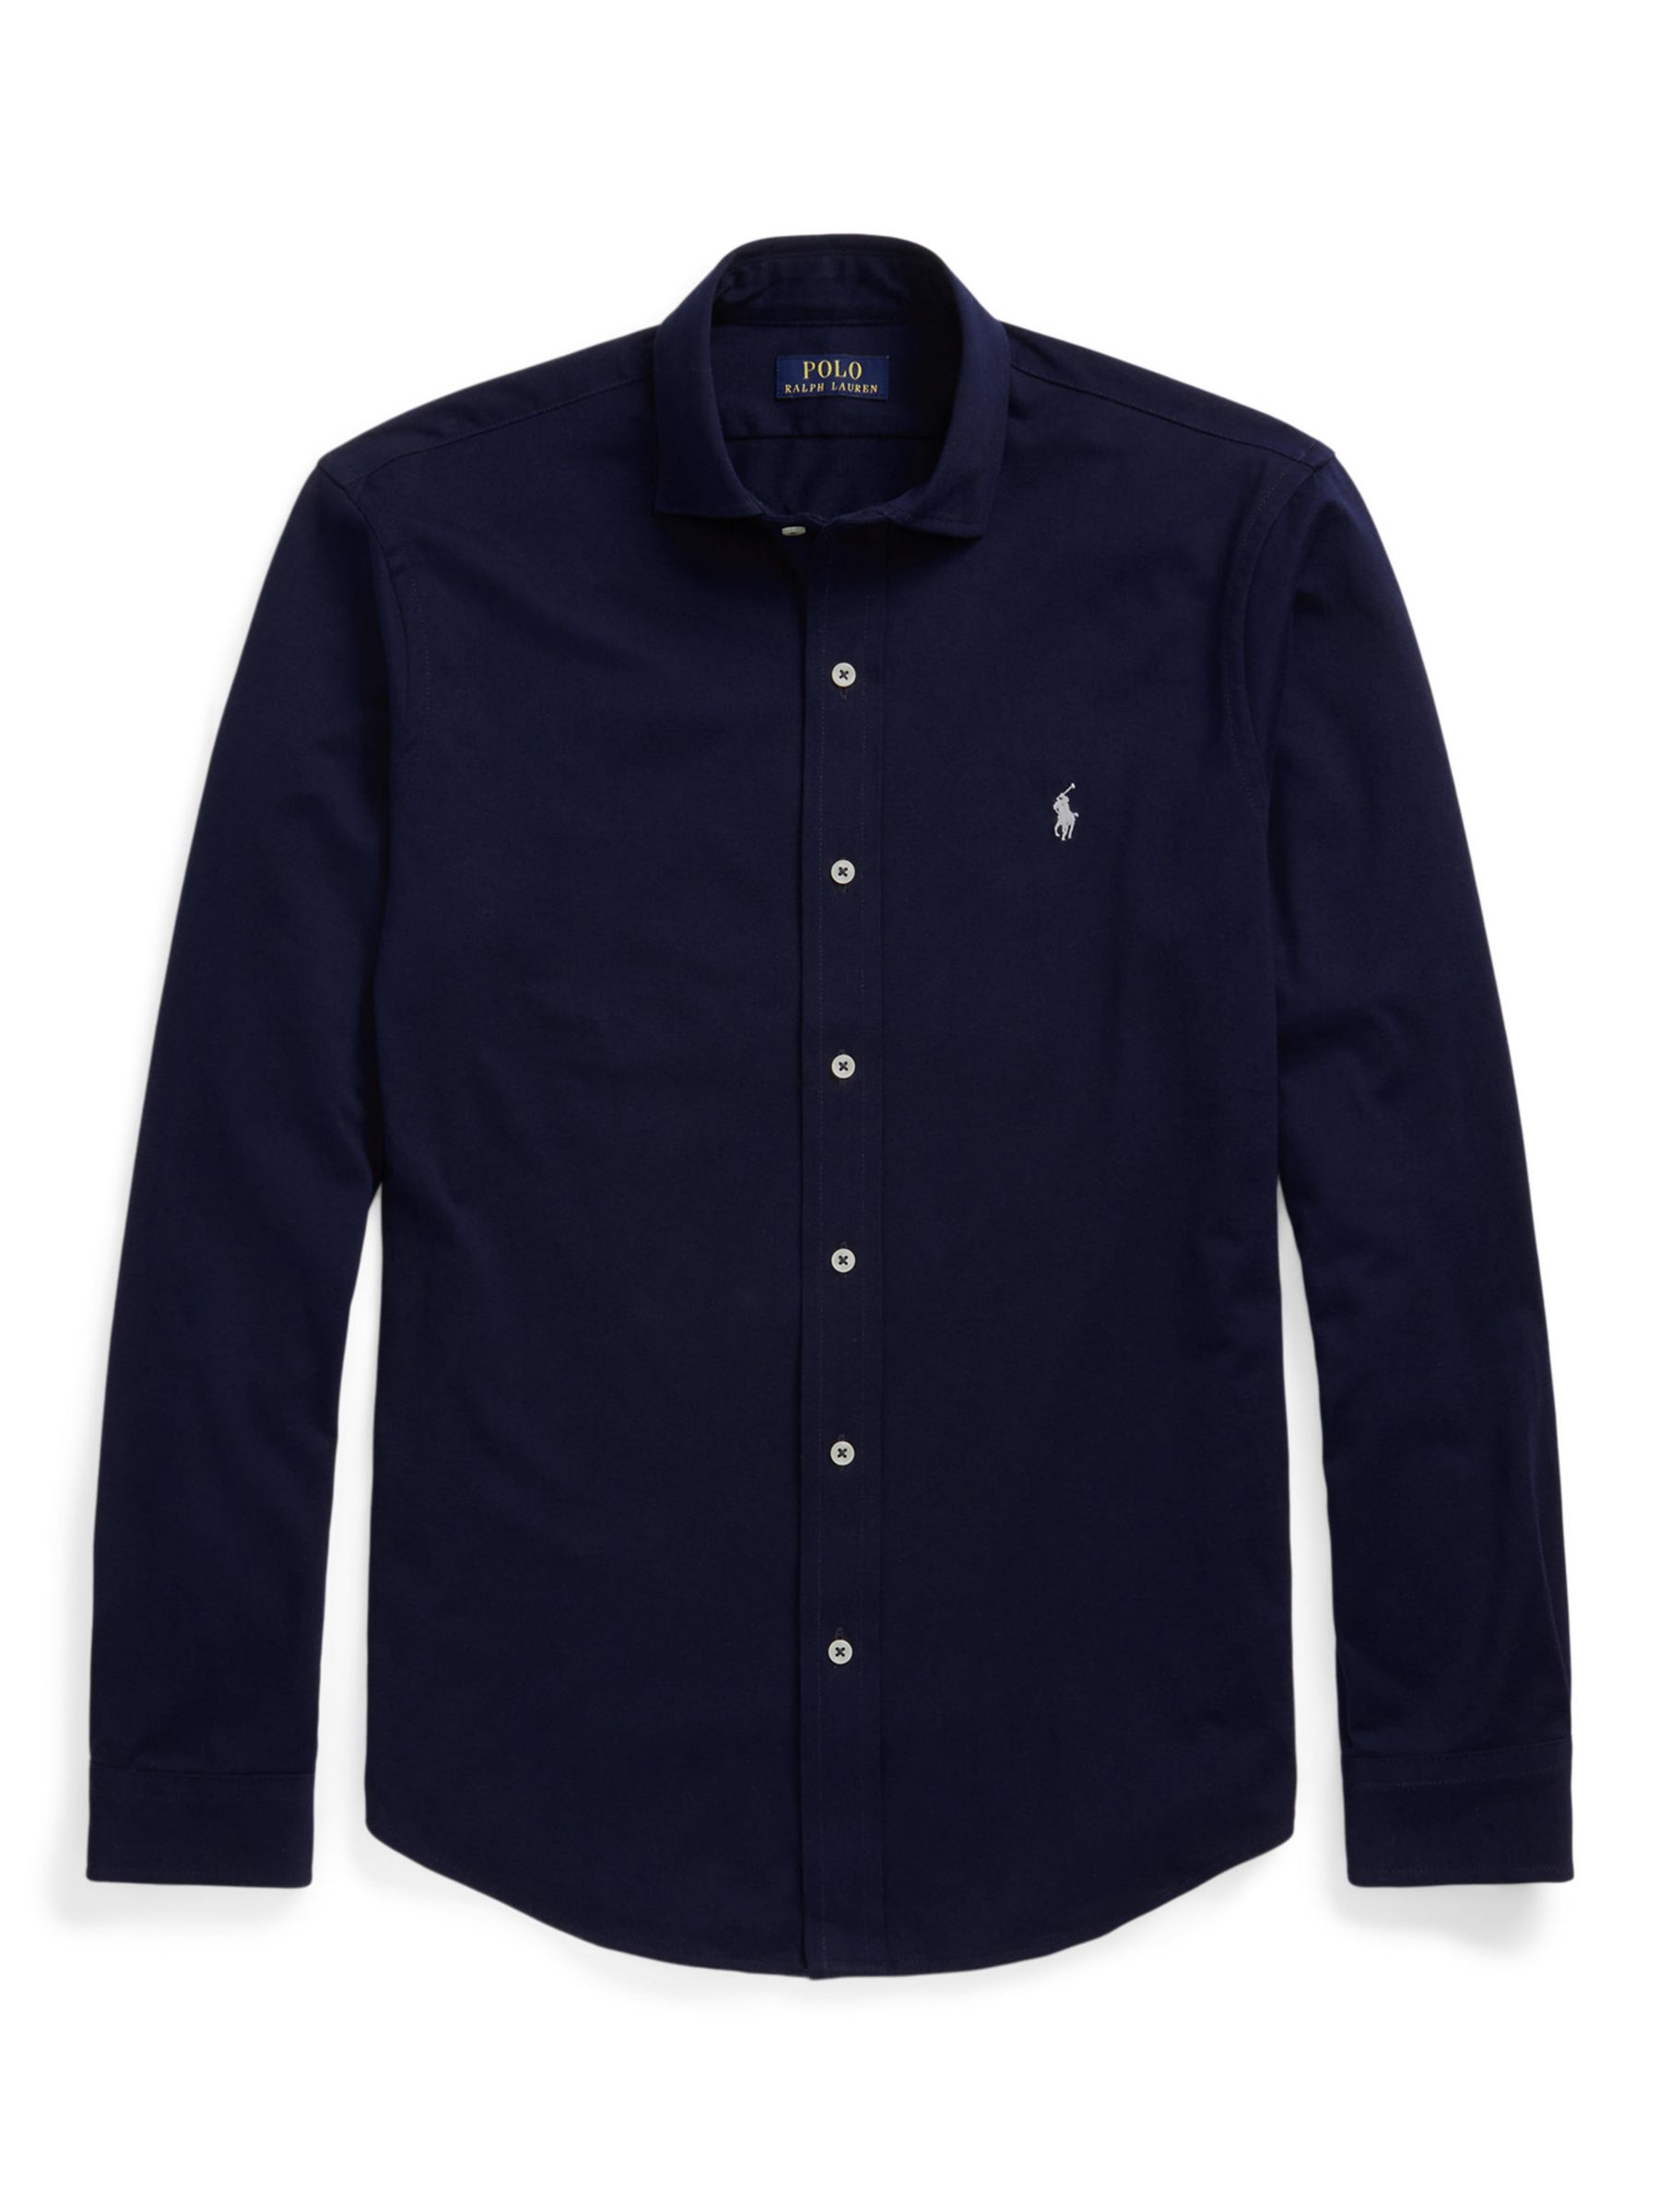 Buy Polo Ralph Lauren Long Sleeve Cotton Shirt Online at johnlewis.com